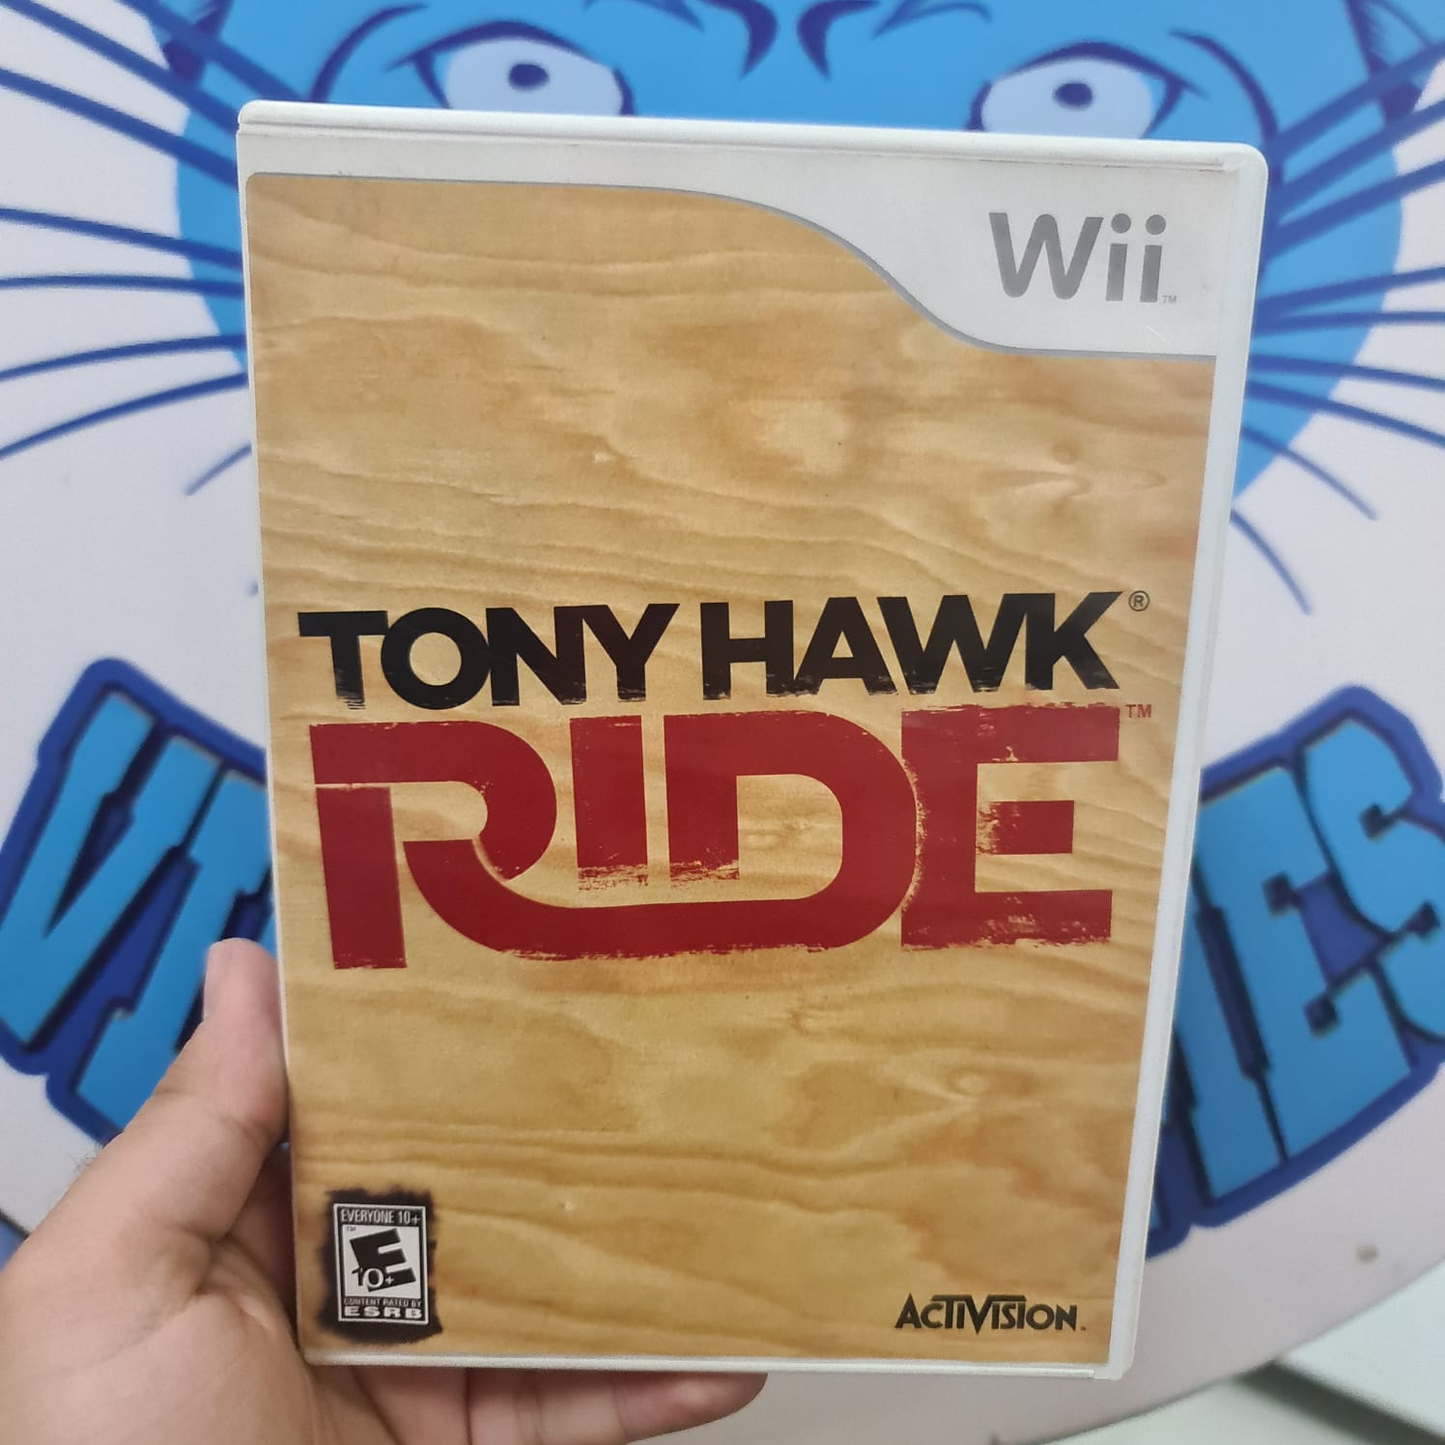 Tony Hawk ride - Nintendo wii